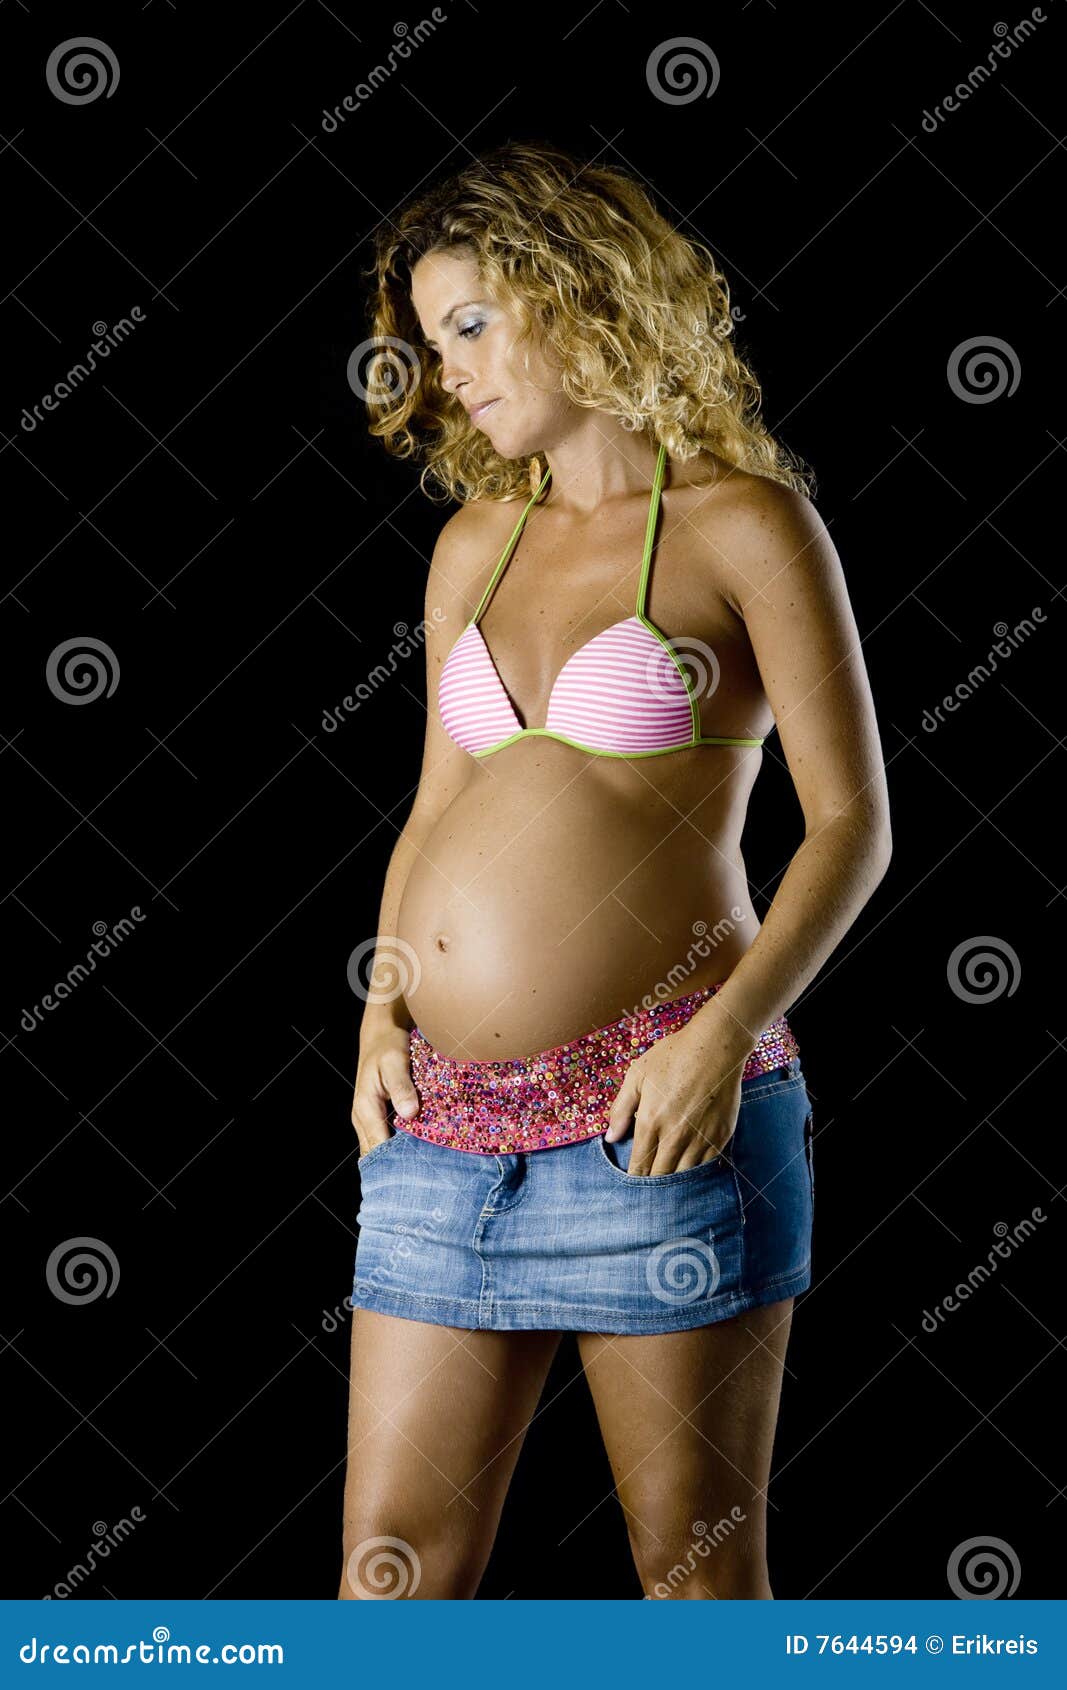 1,173 Pregnant Woman Bikini Stock Photos image pic